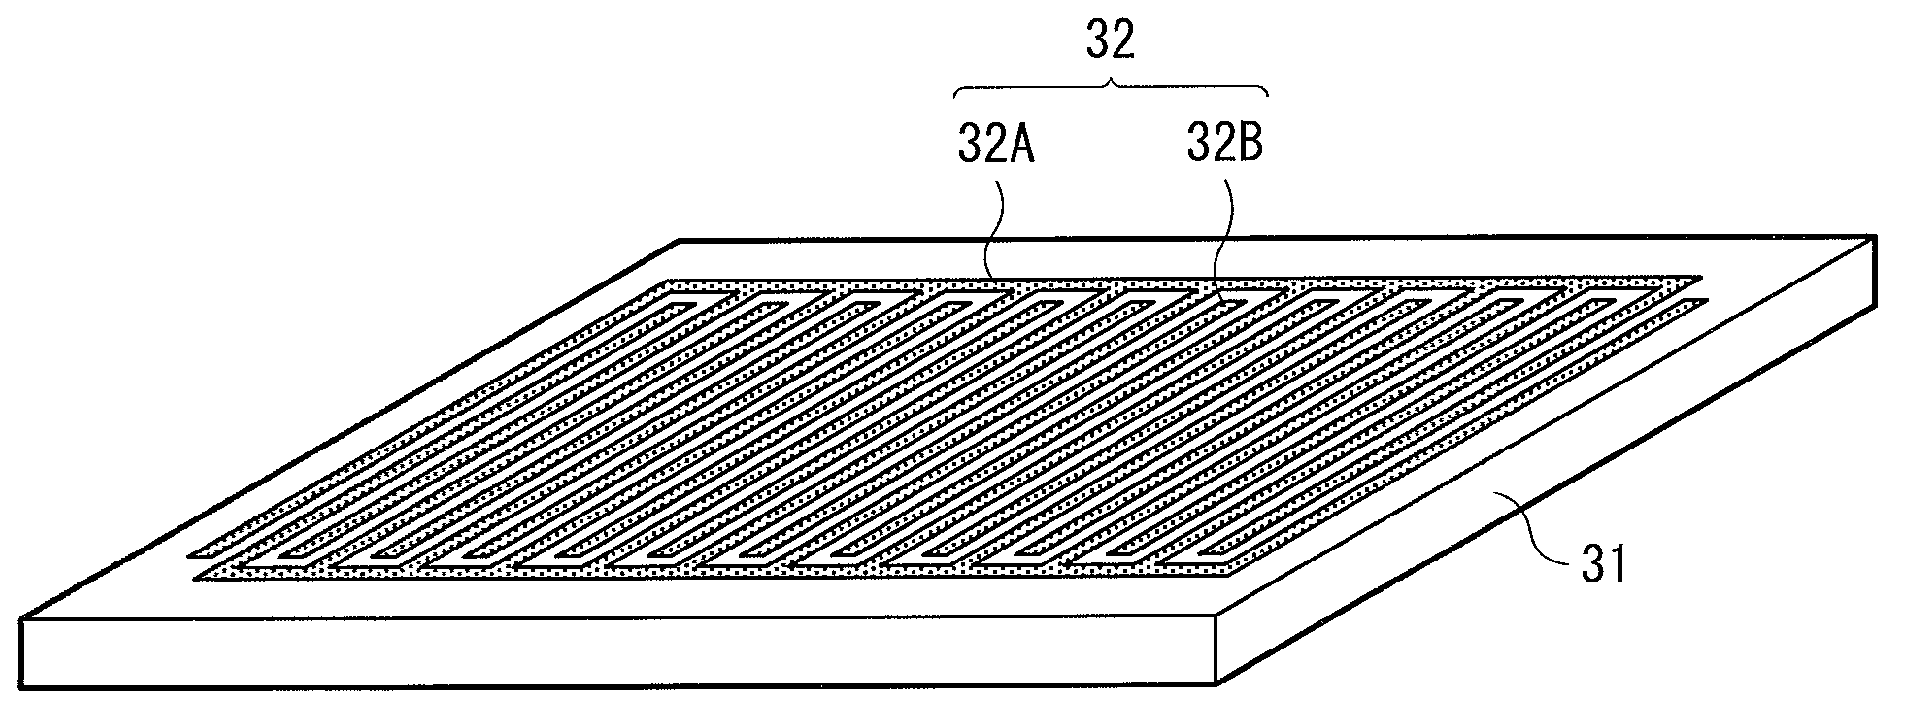 Display panel, and display device